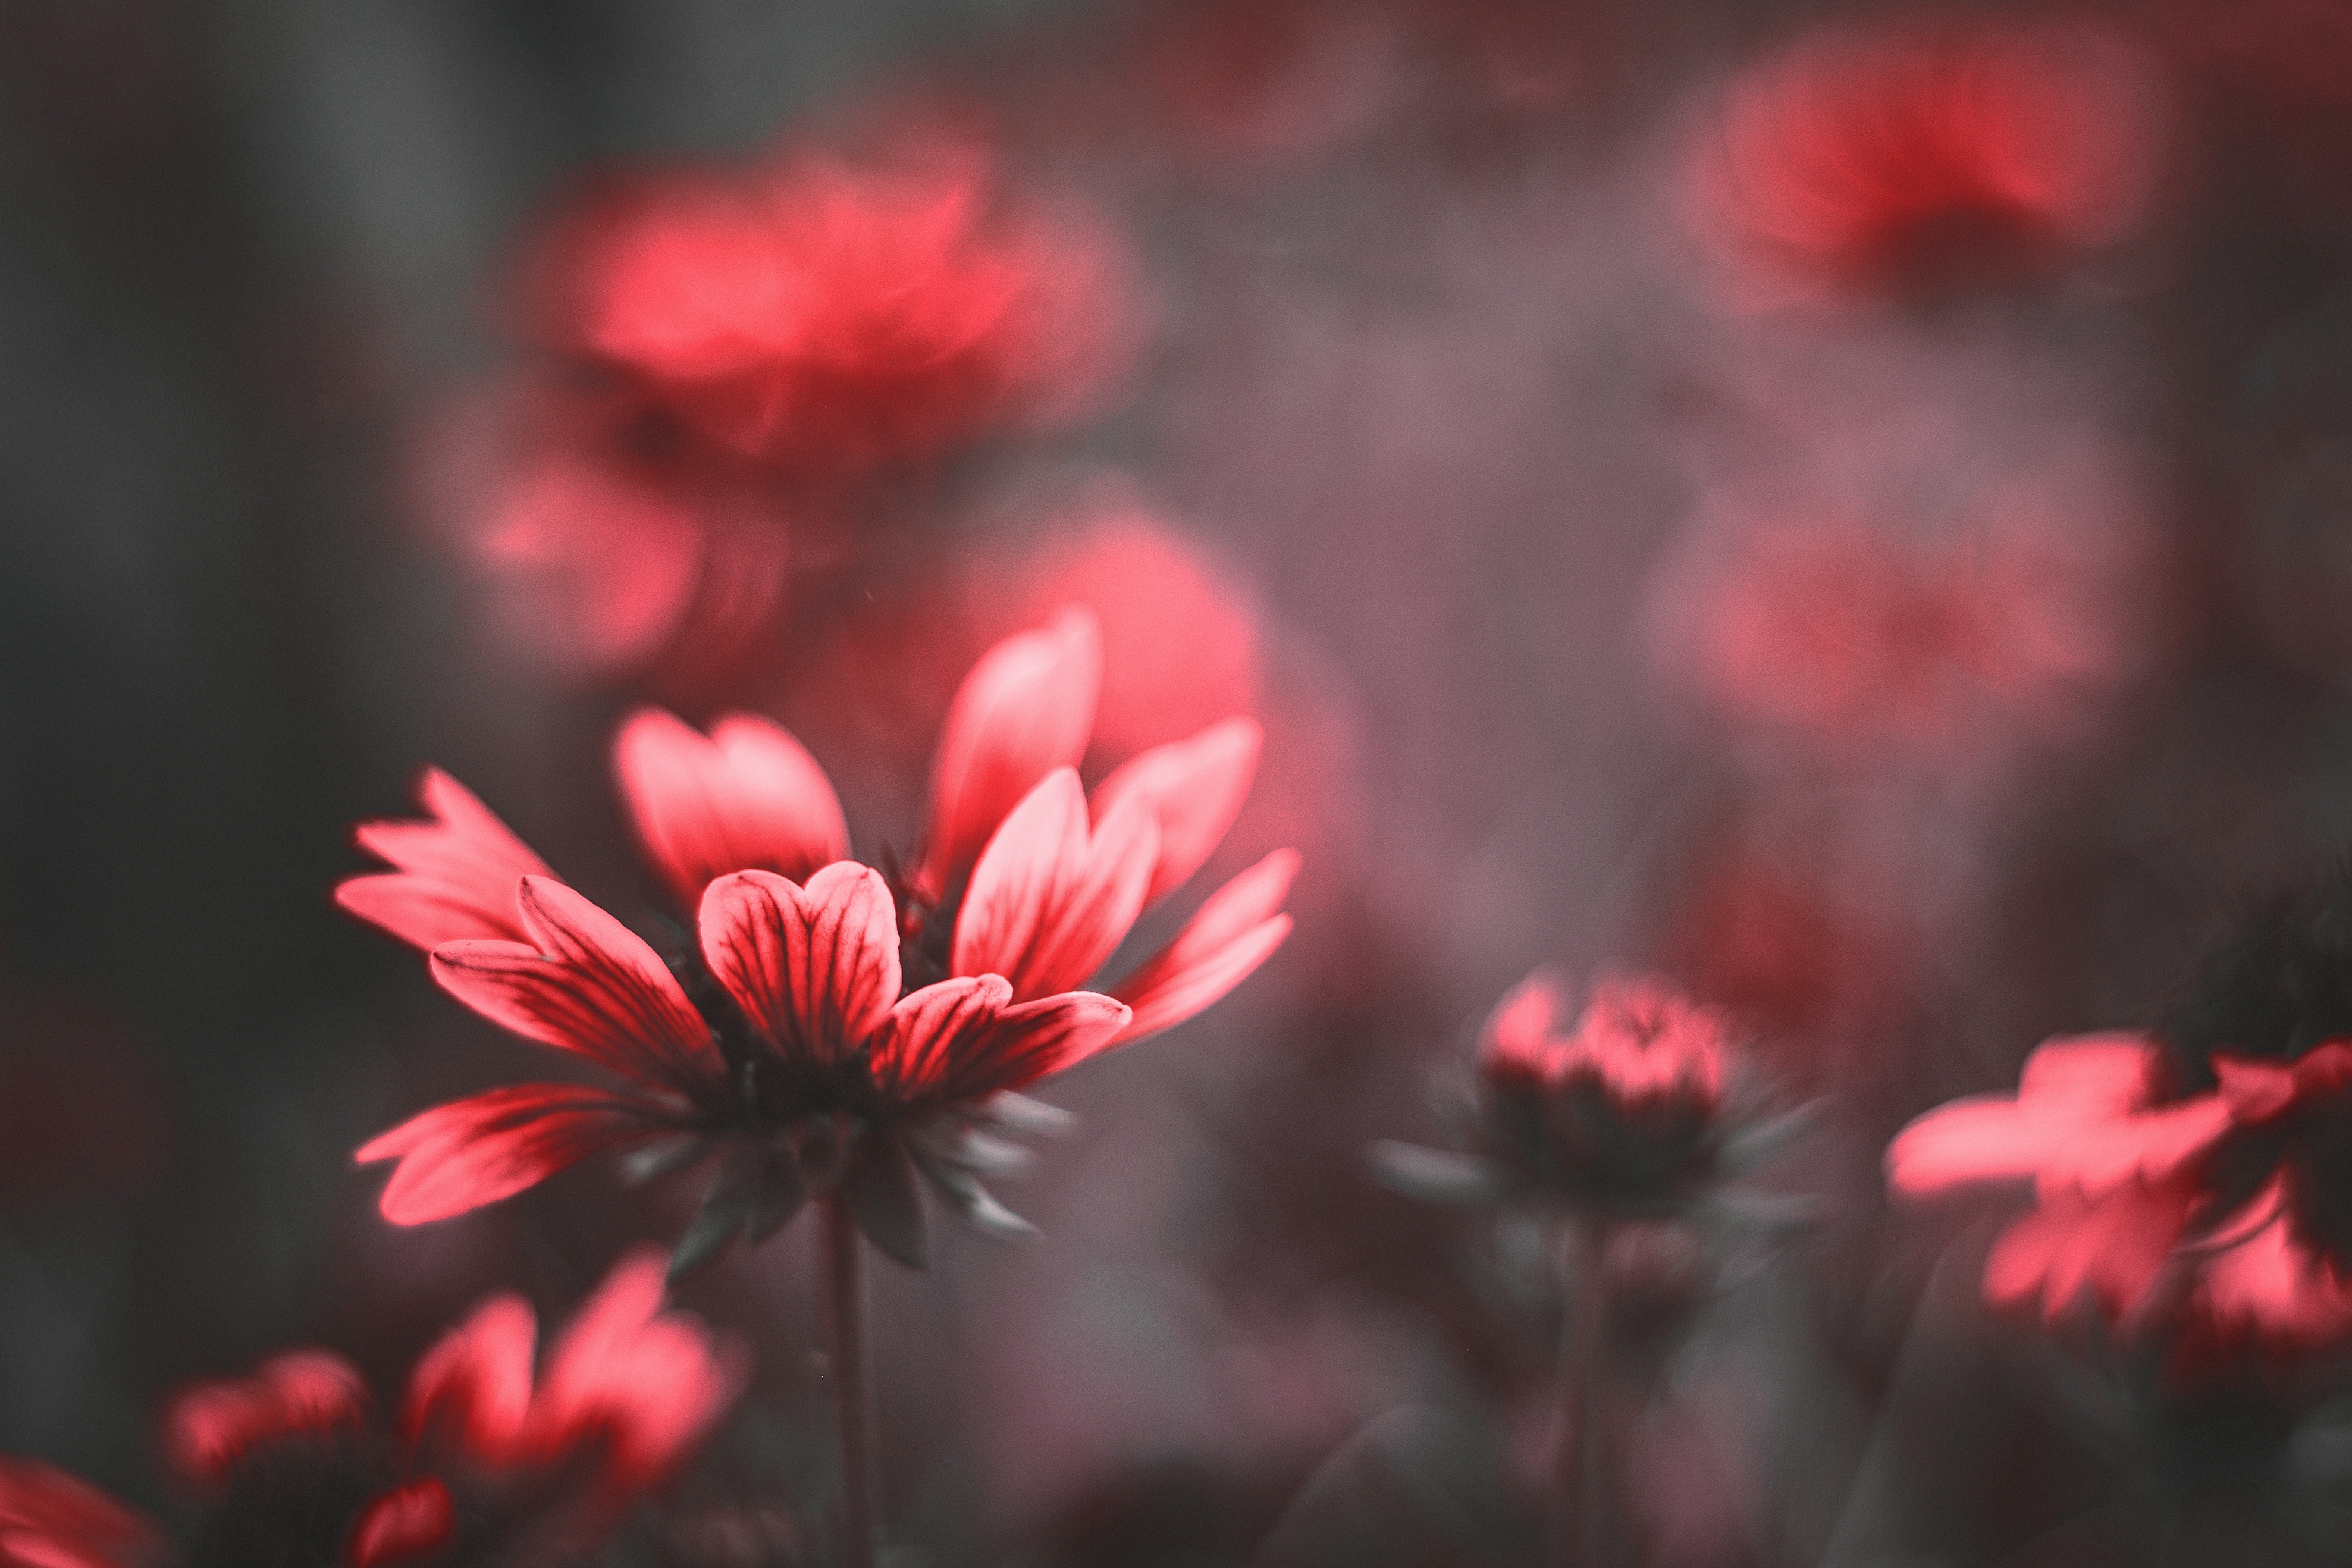 A red flower in a garden full of flowers